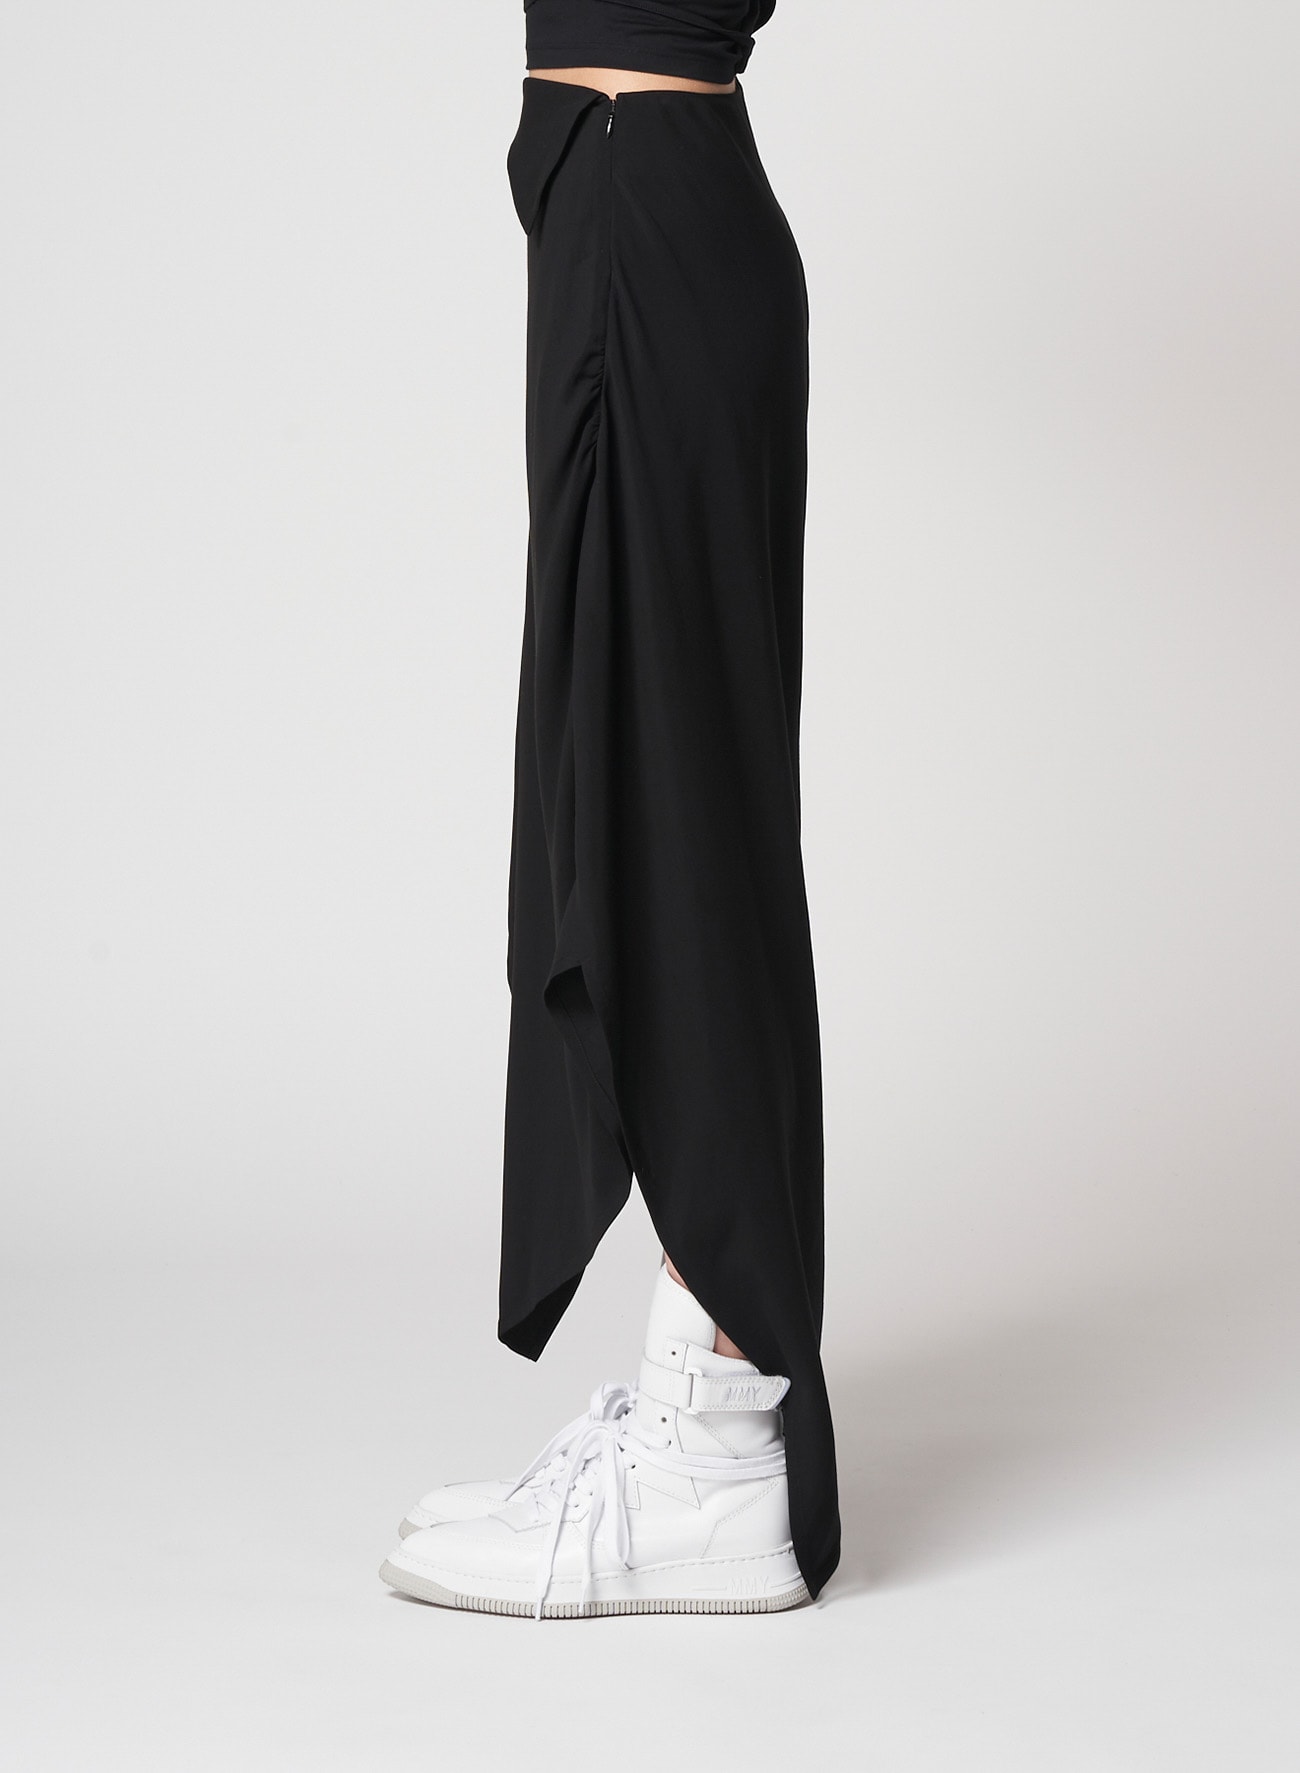 Ry/Cu Tussah Irregular Hem Skirt